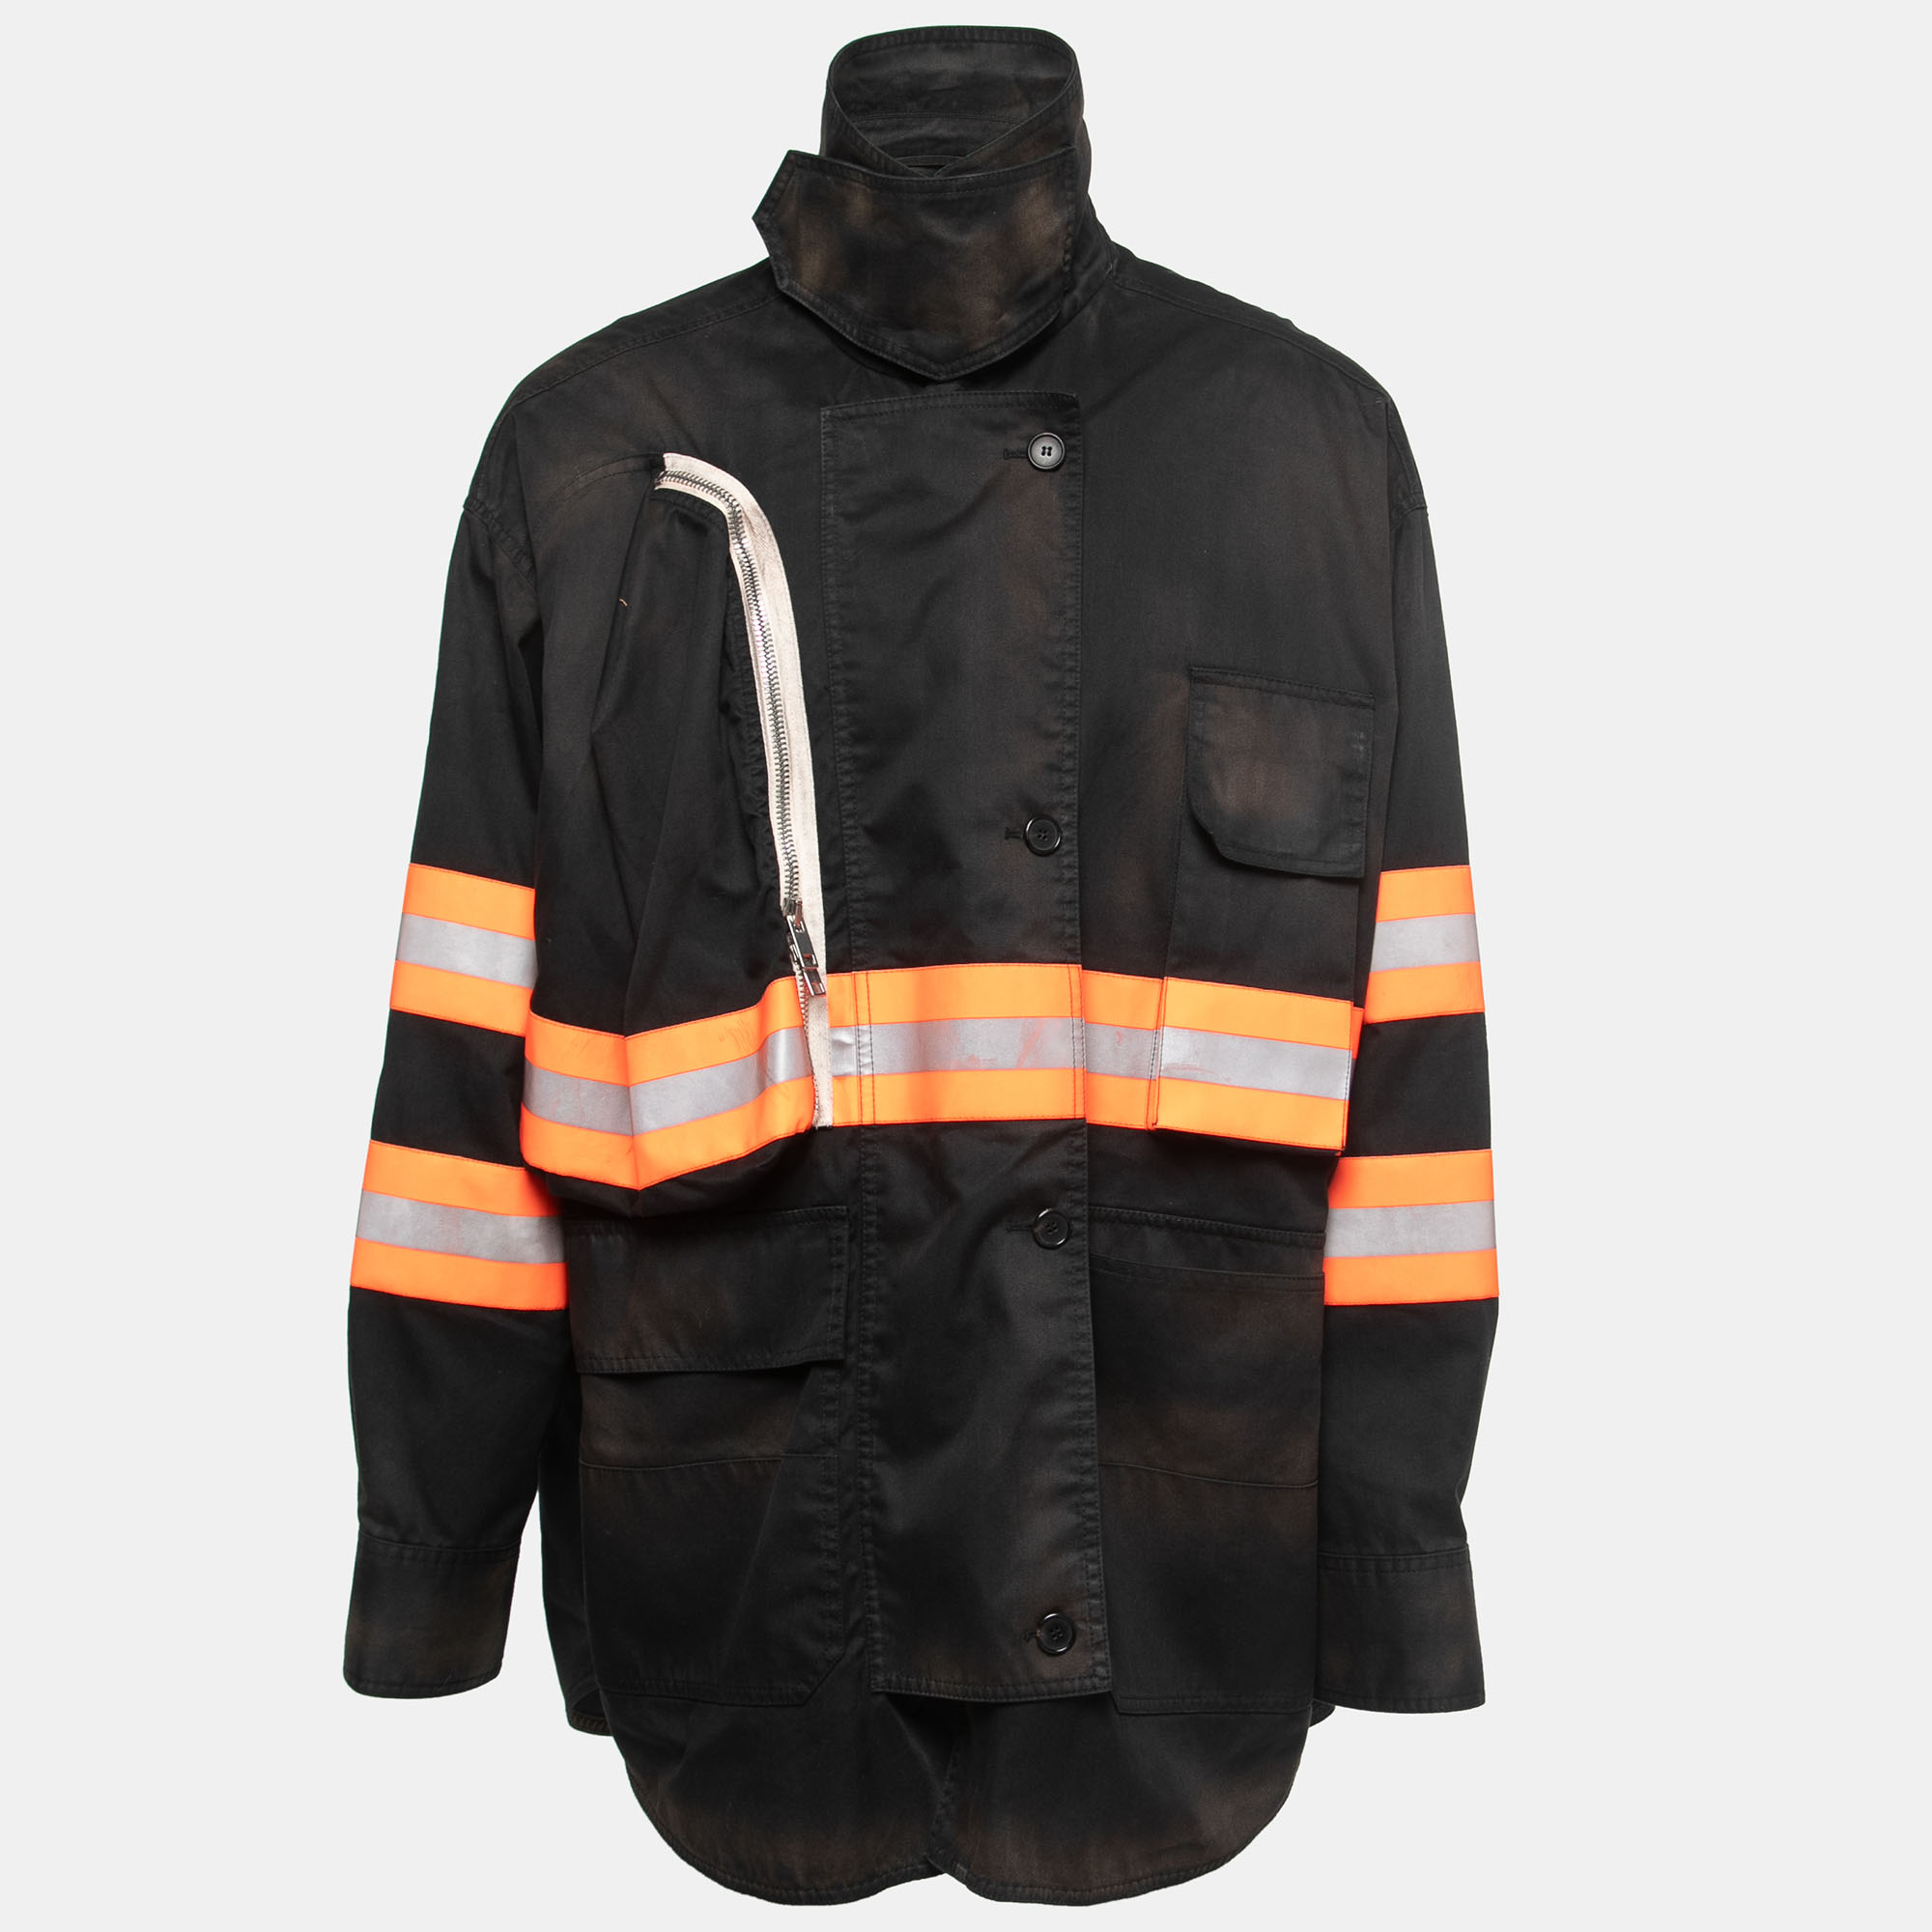 

Calvin Klein Black Cotton Reflective Fireman Jacket